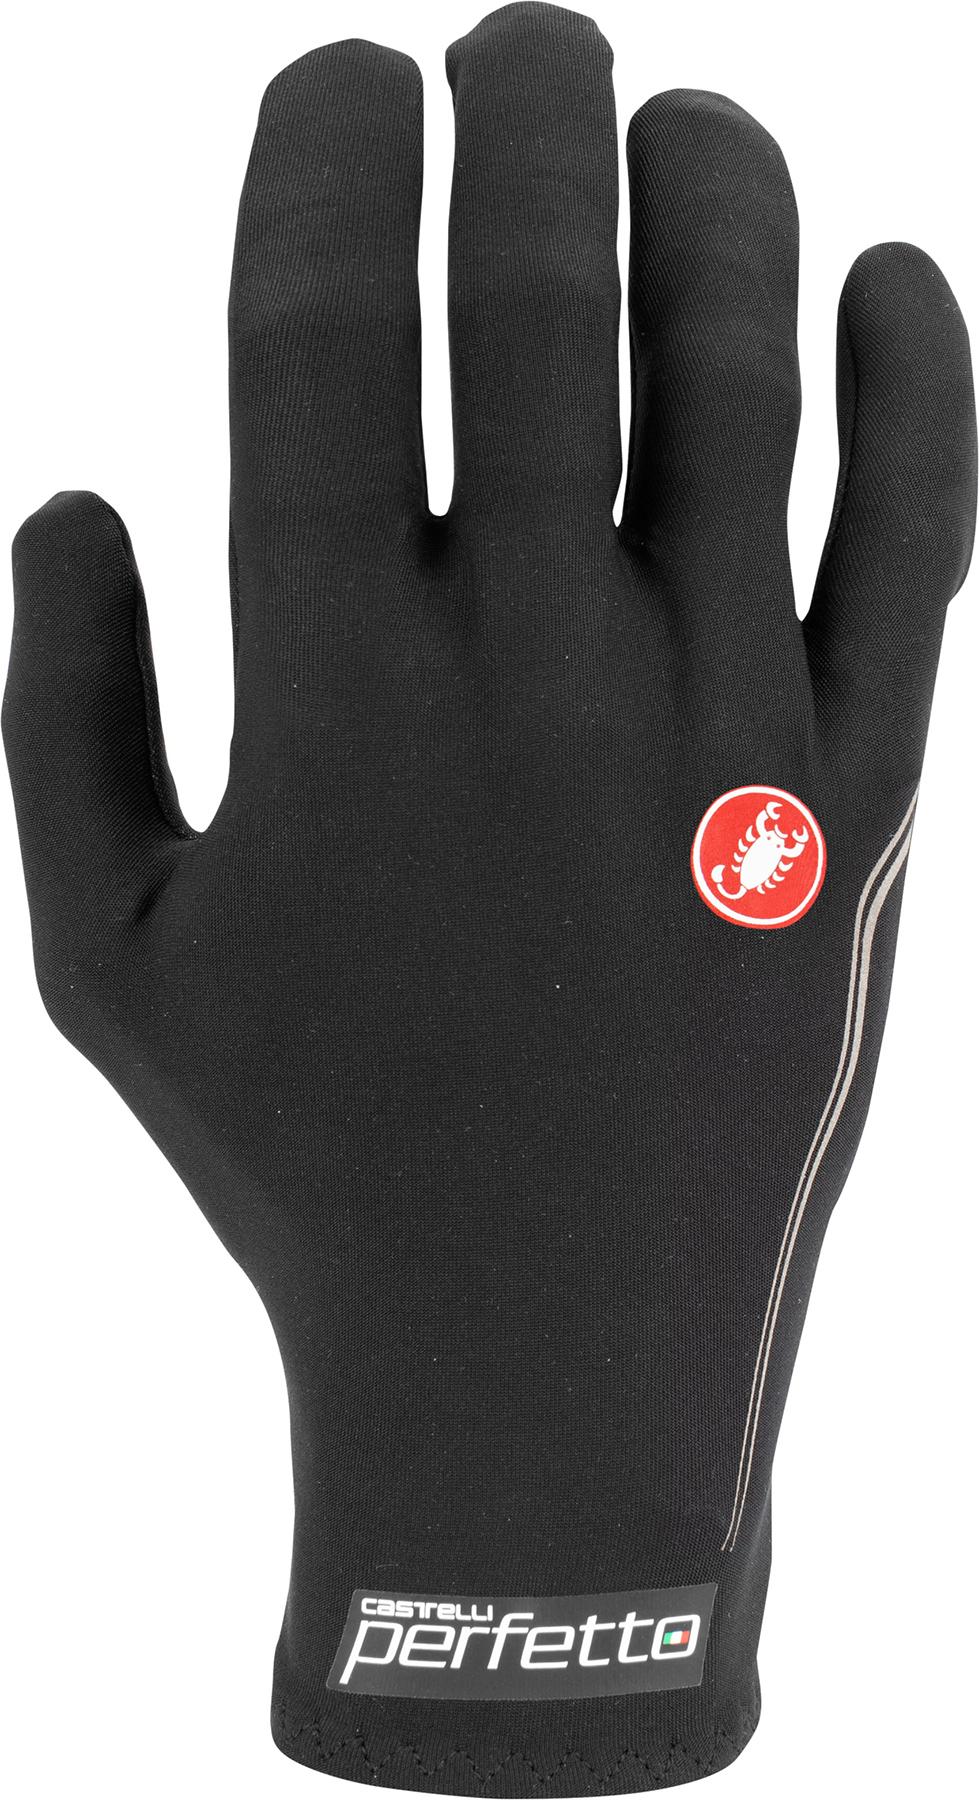 Castelli Perfetto Light Gloves  Black